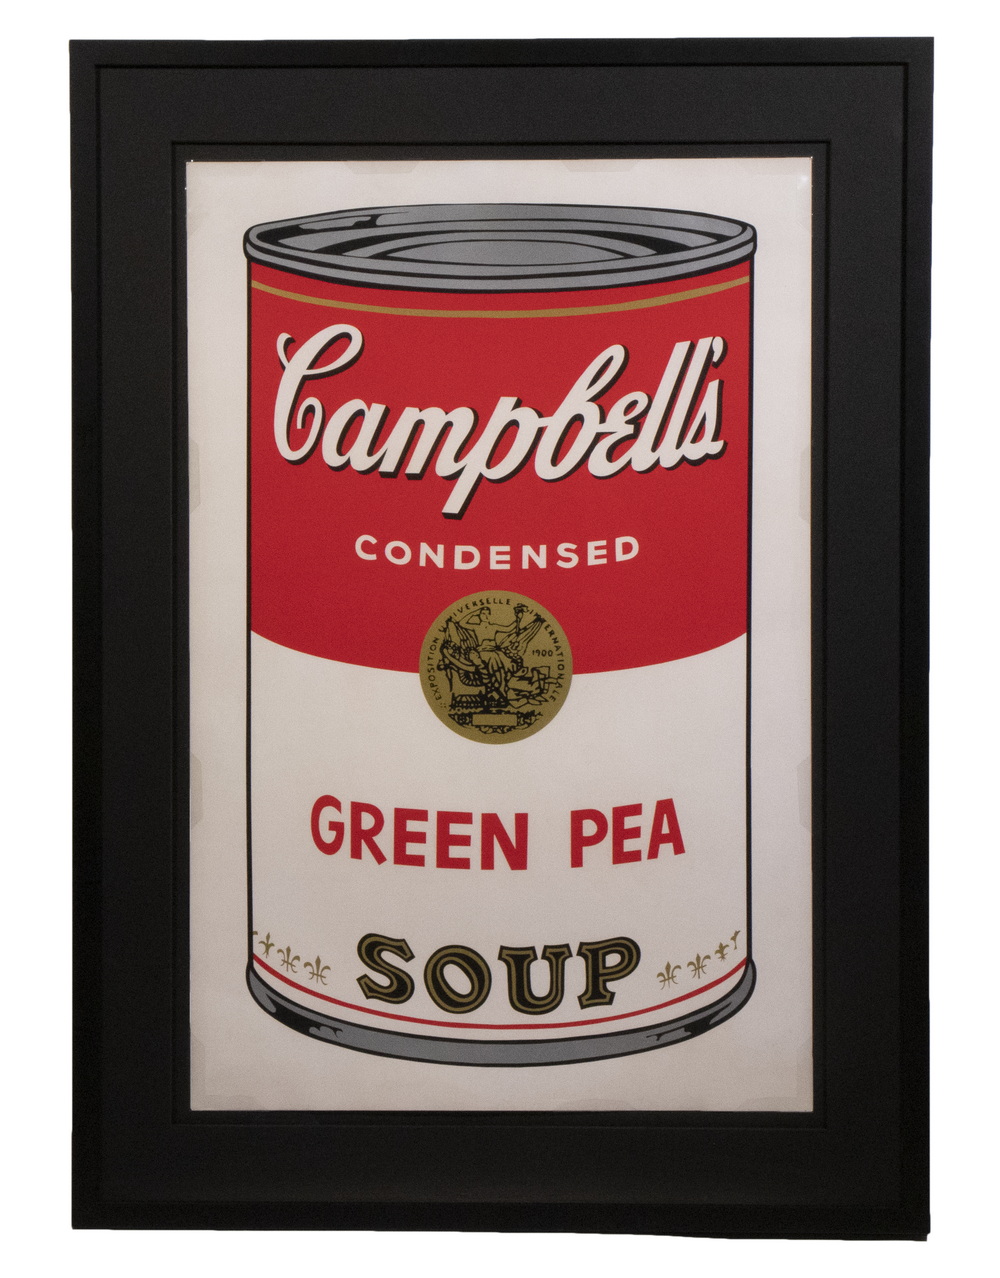 ANDY WARHOL (NY, 1929-1987) "Campbell's